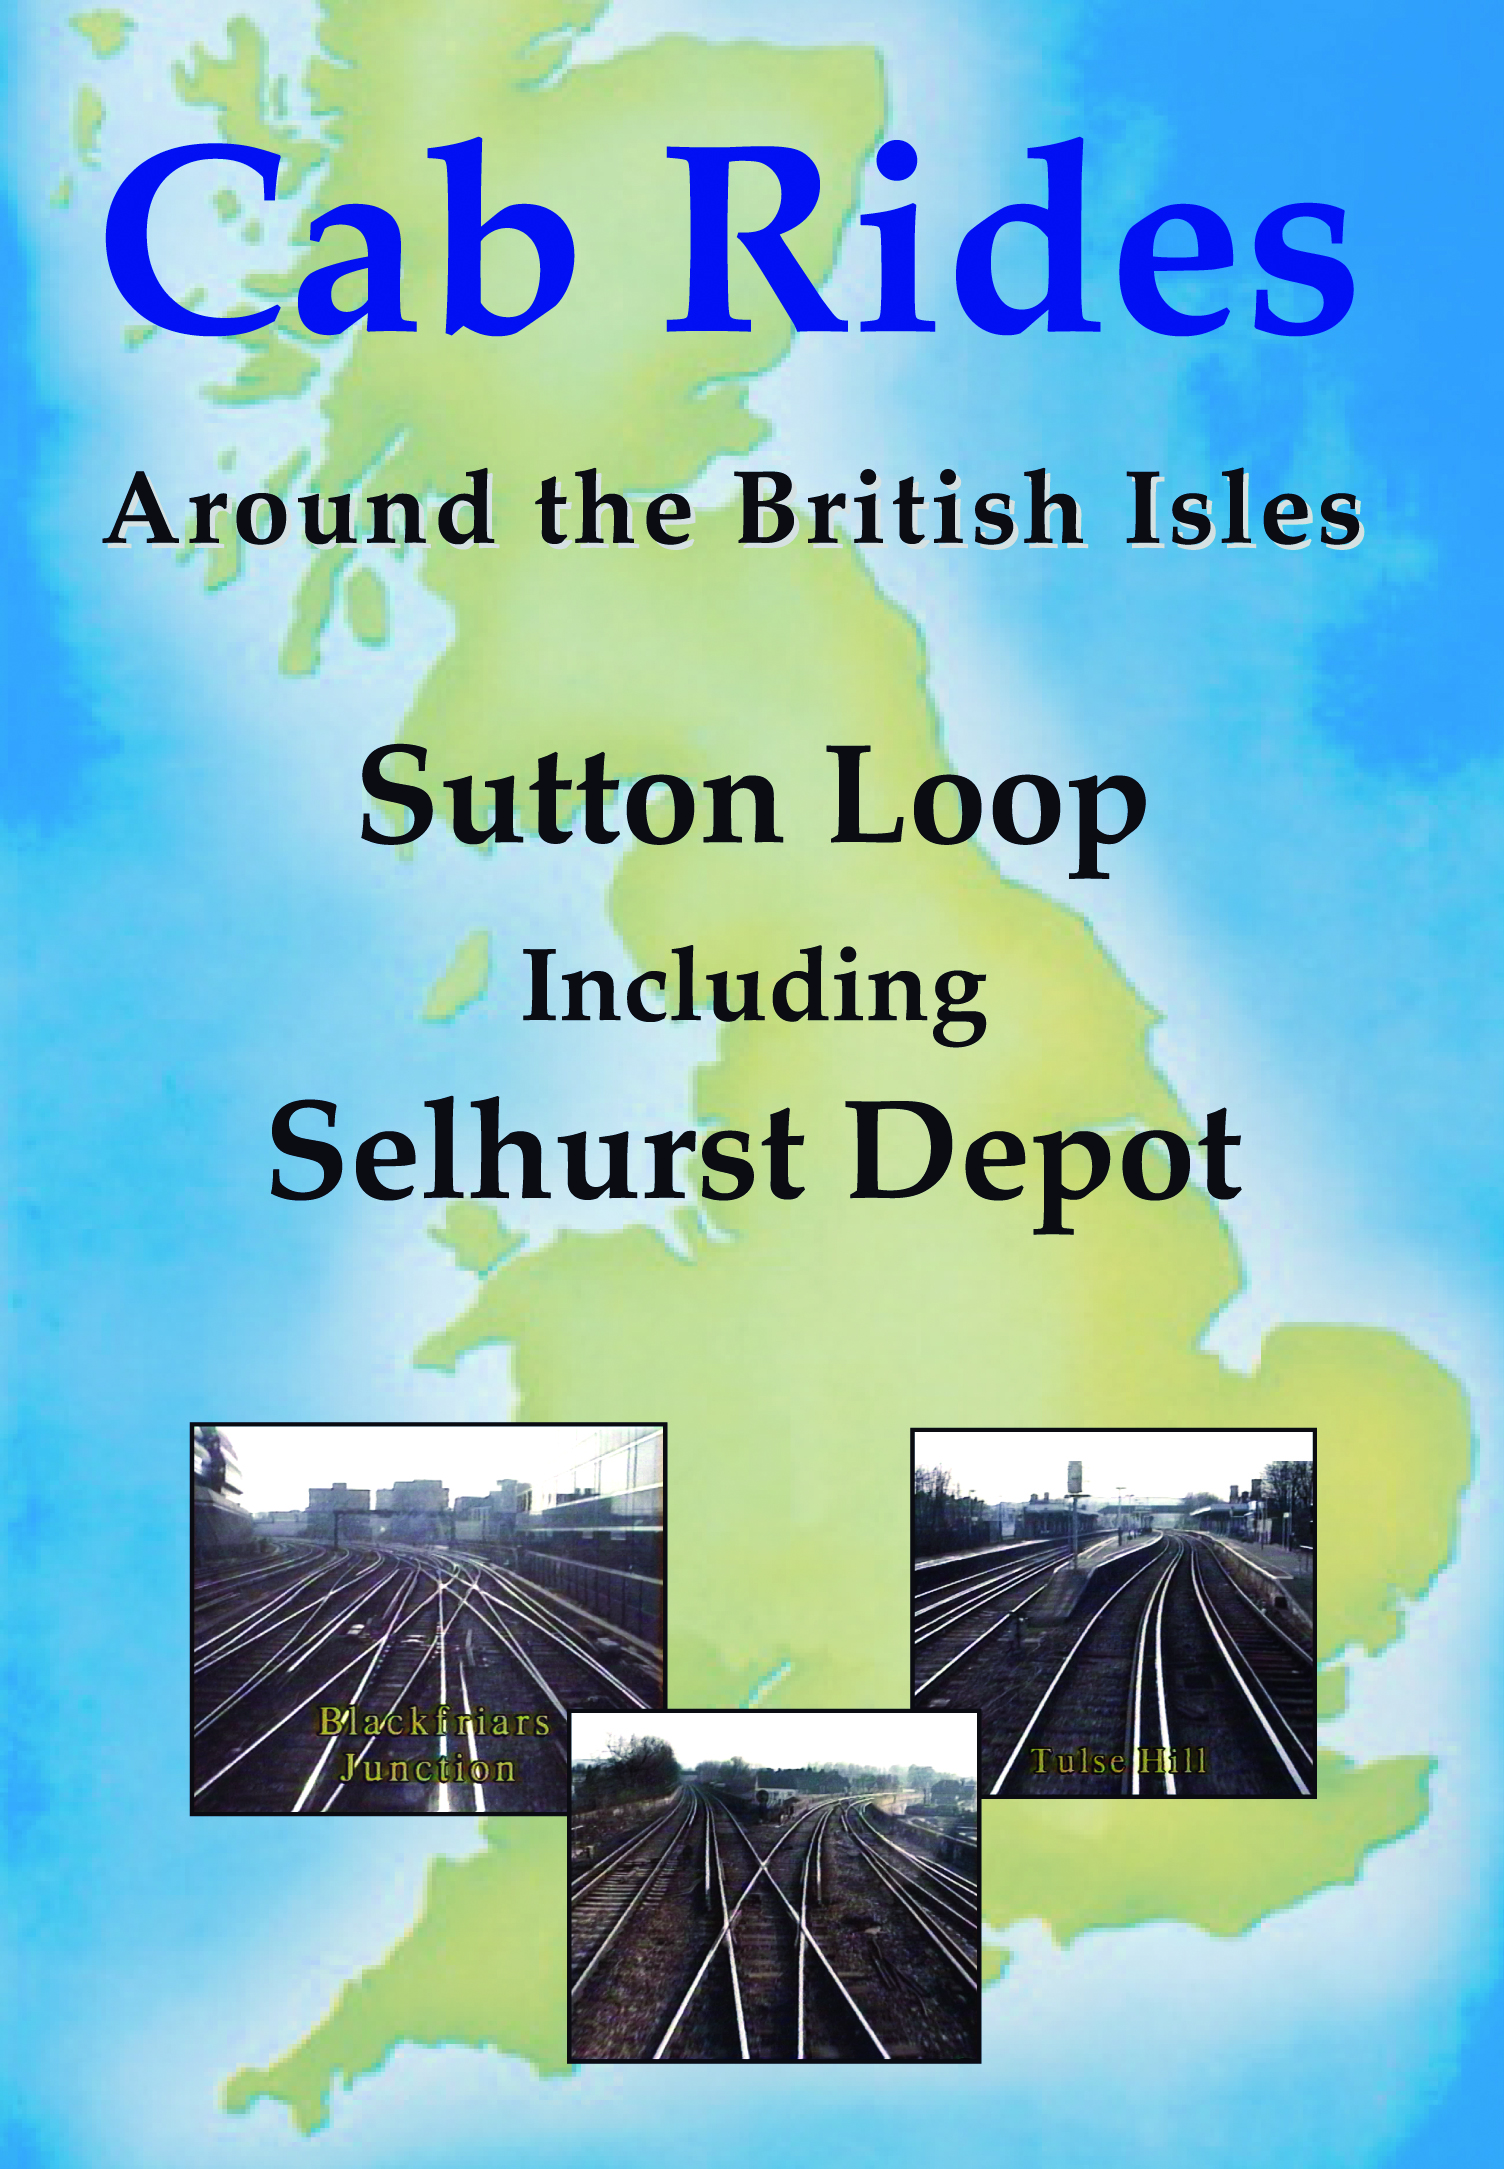 Cab Rides Around the British Isles: Sutton Loop including Selhurst Depot